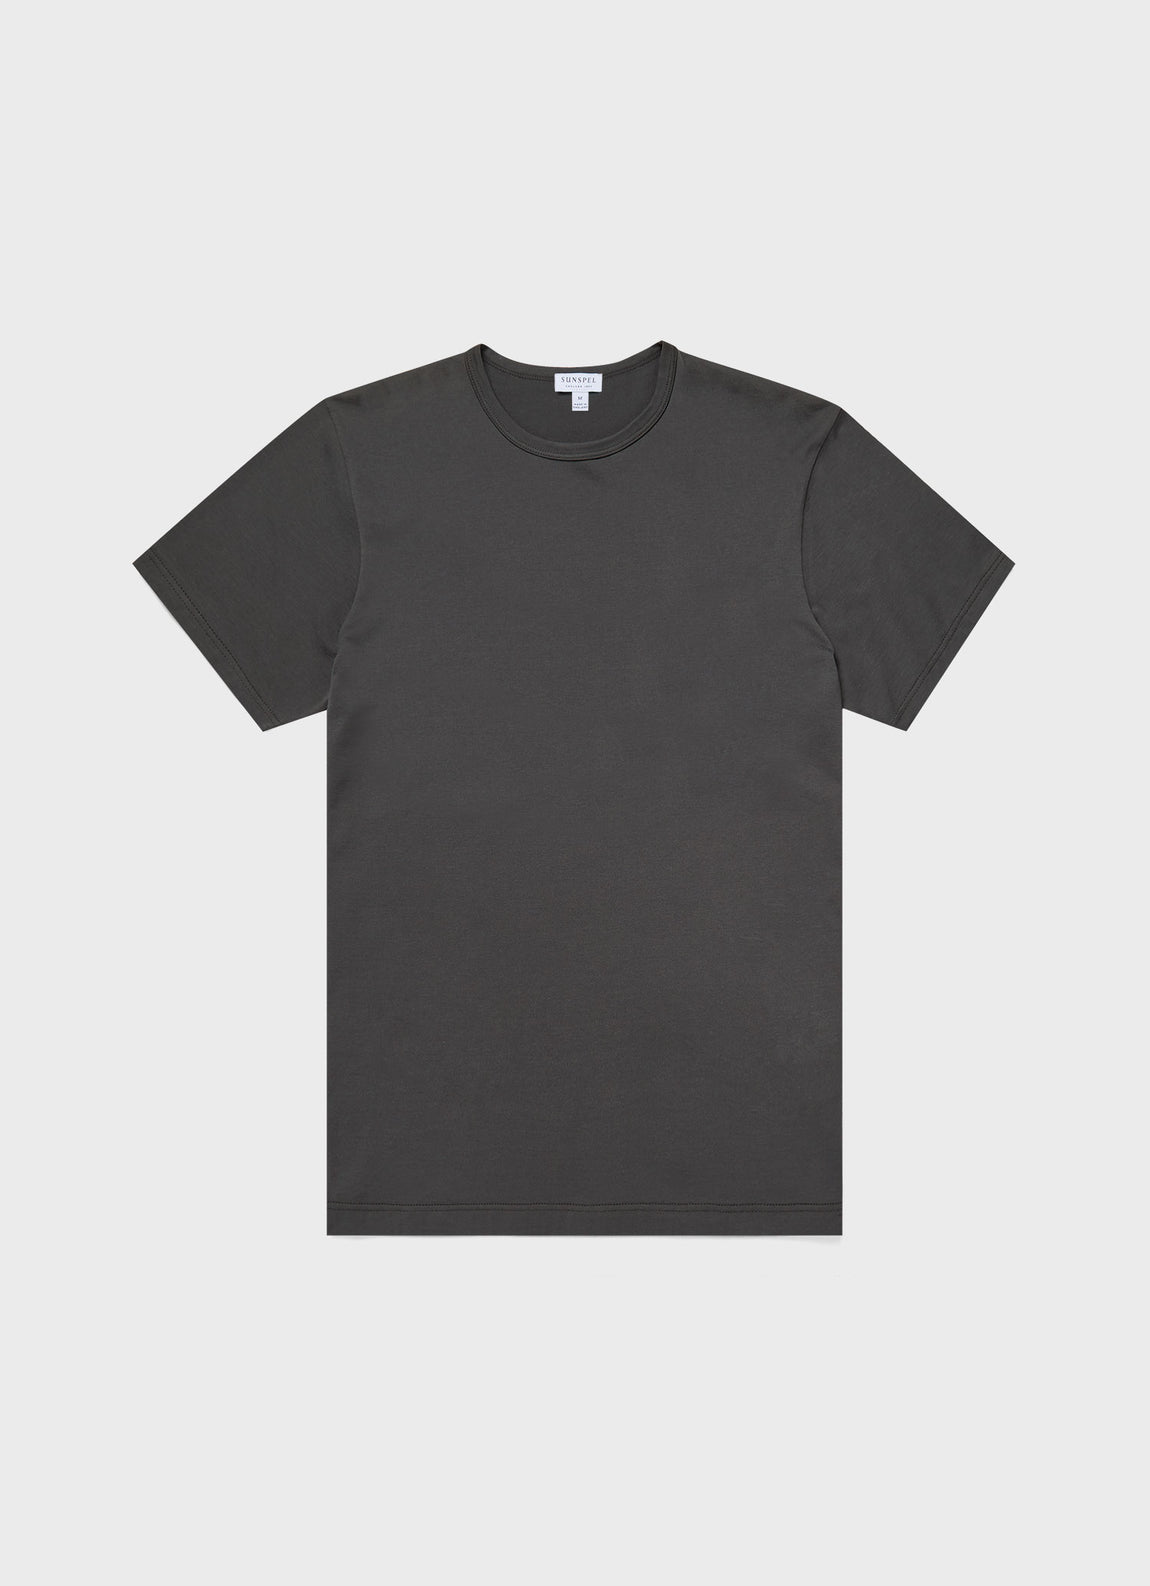 Men's Classic T-shirt in Charcoal